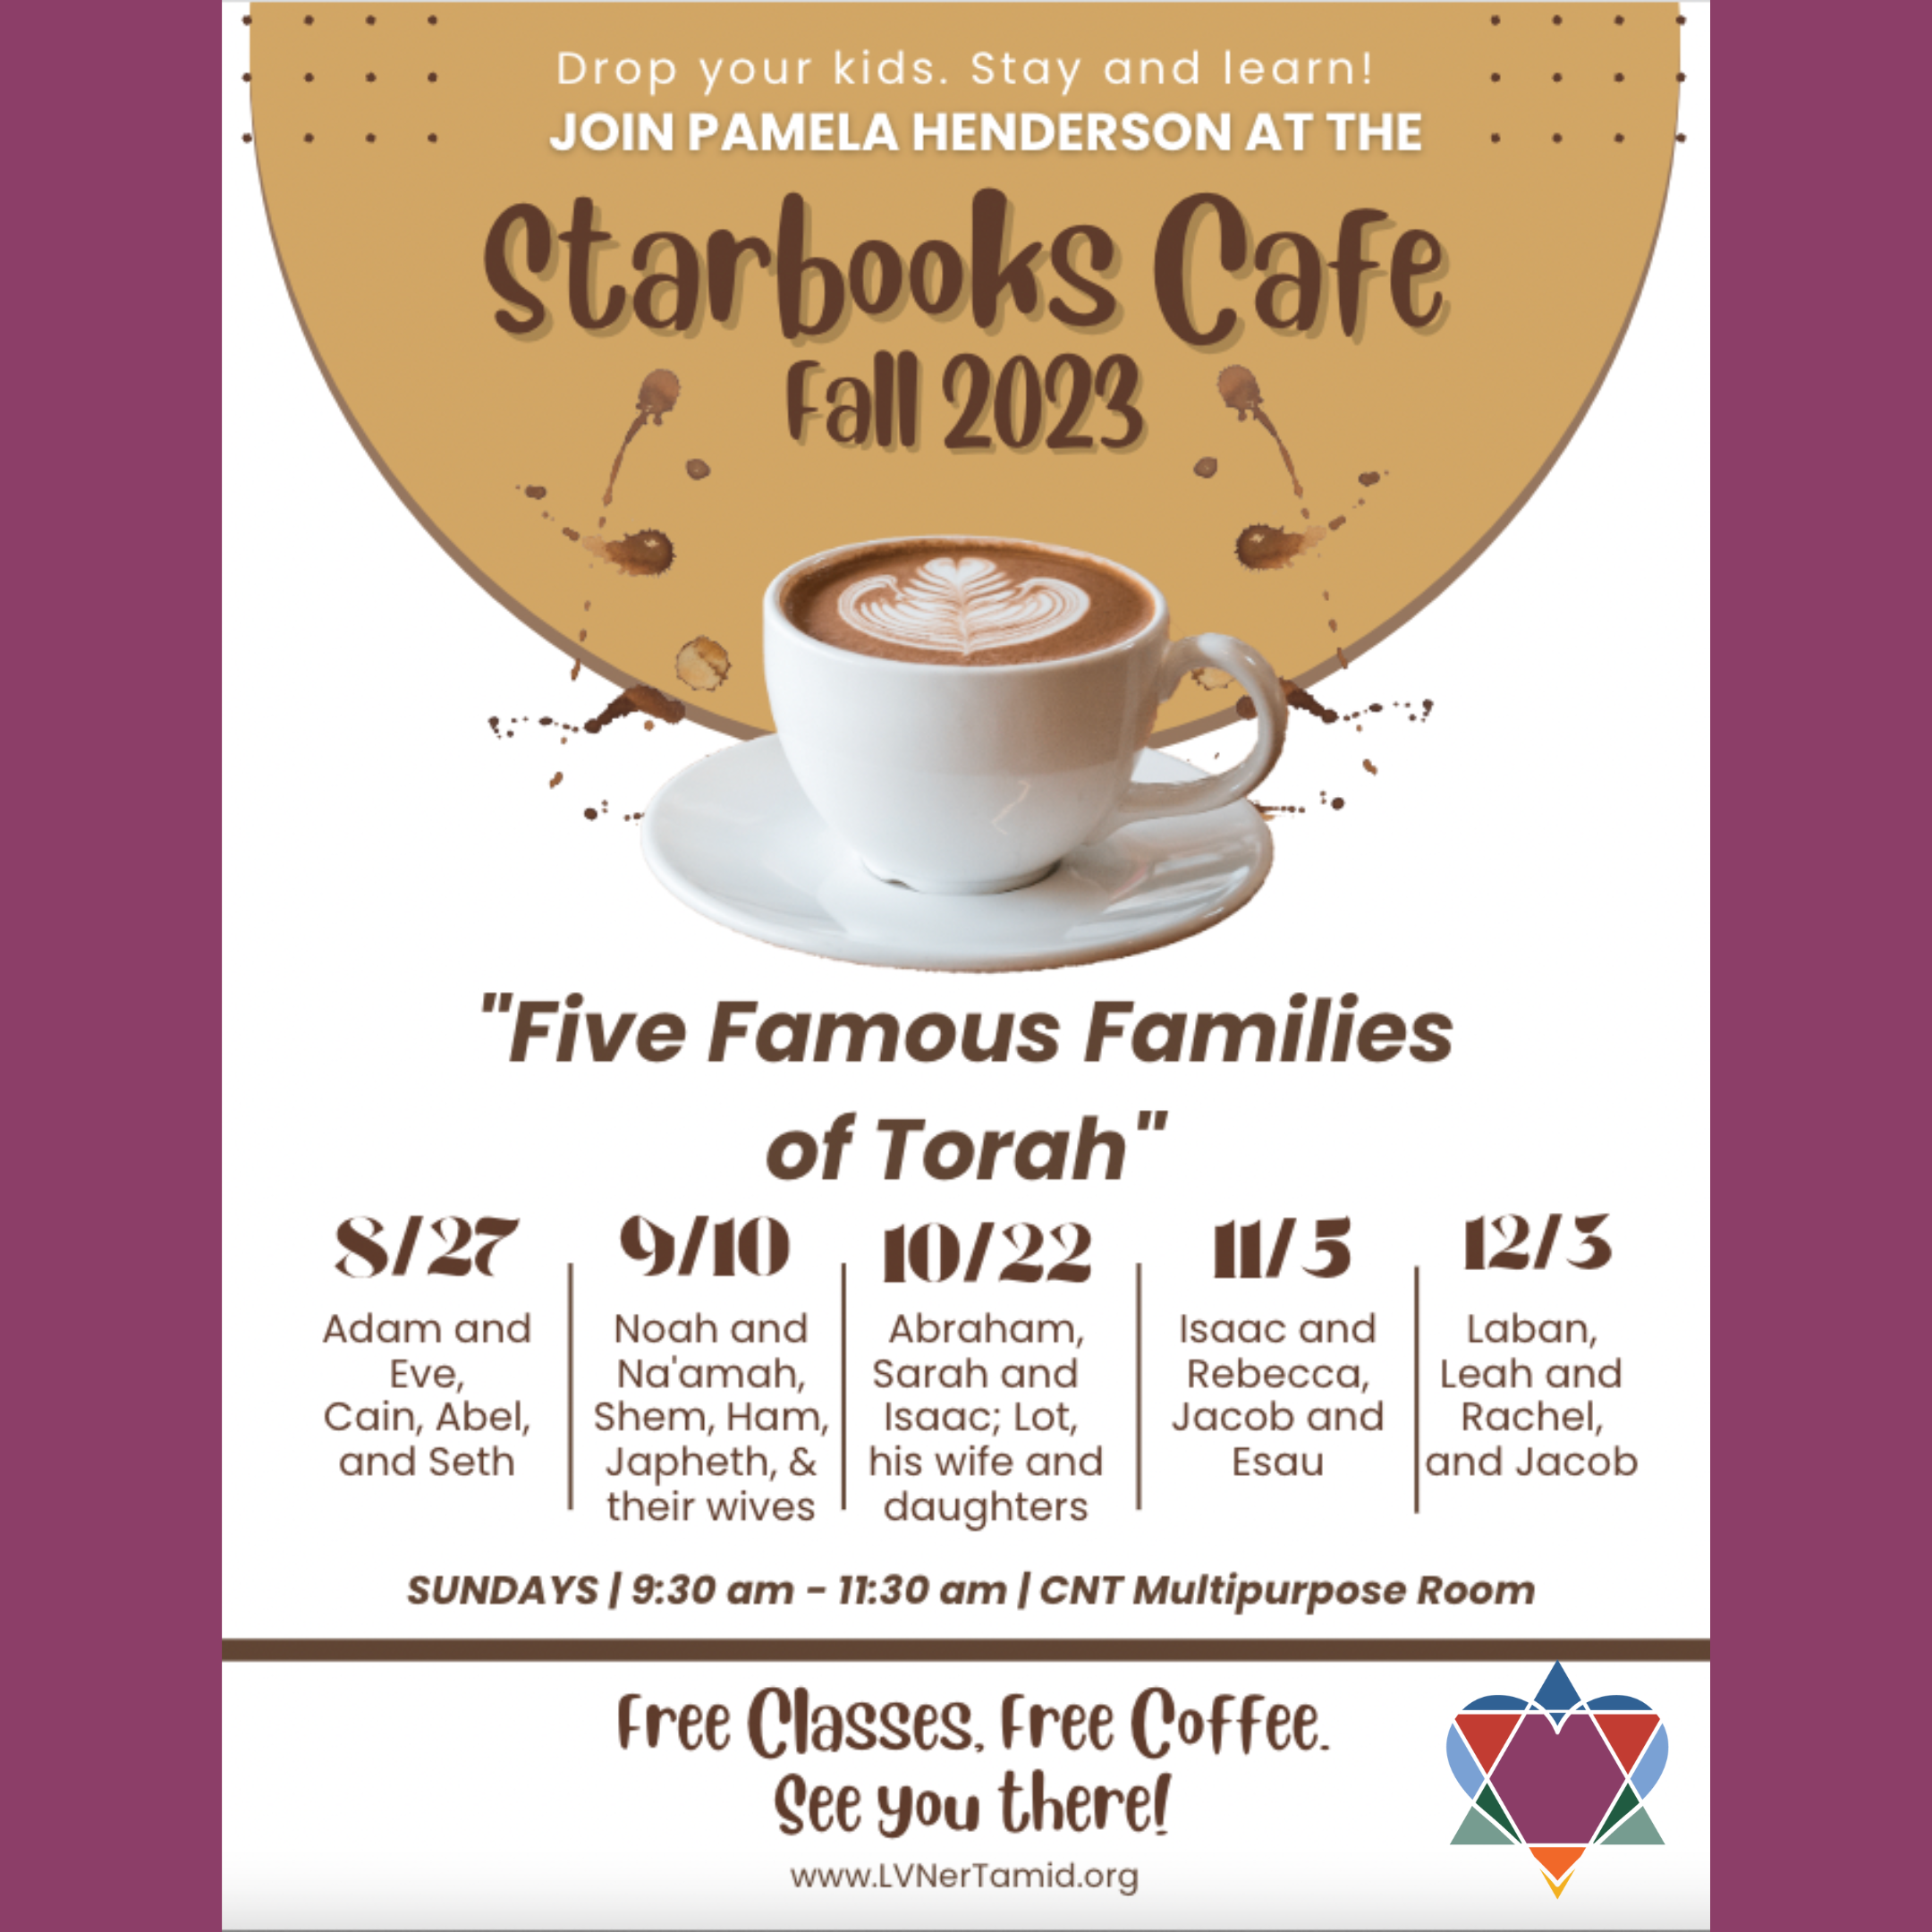 STARBOOKS CAFE 2023 WITH PAMELA HENDERSON